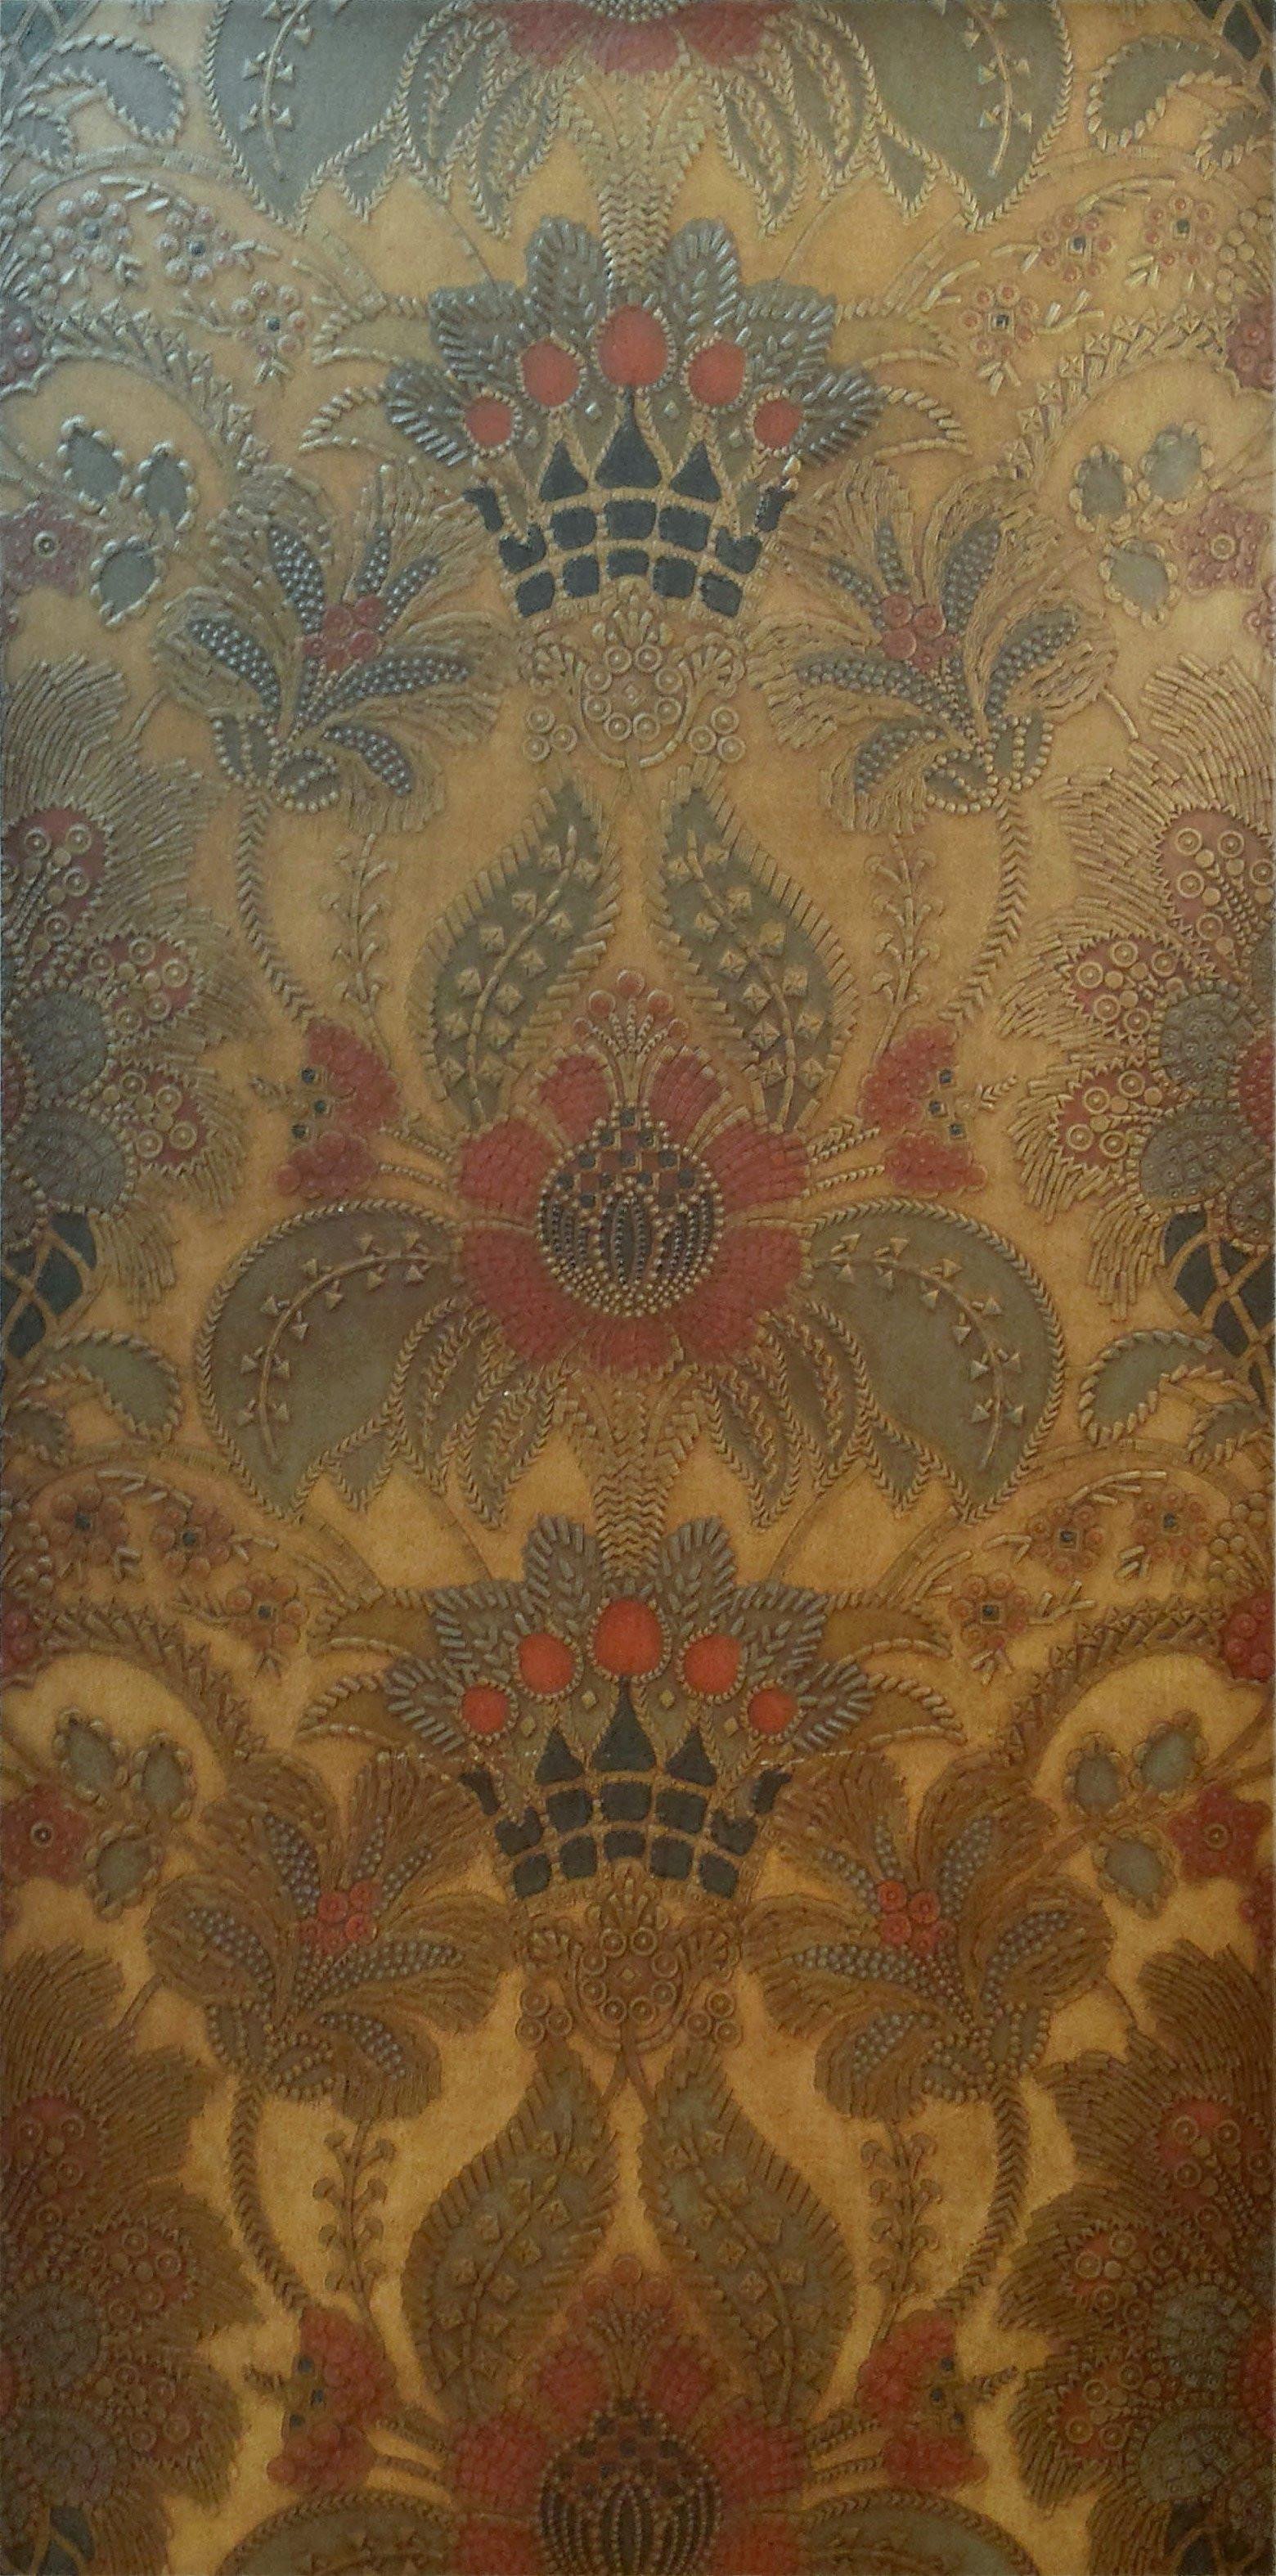 antic wallpaper,brown,pattern,textile,wallpaper,art